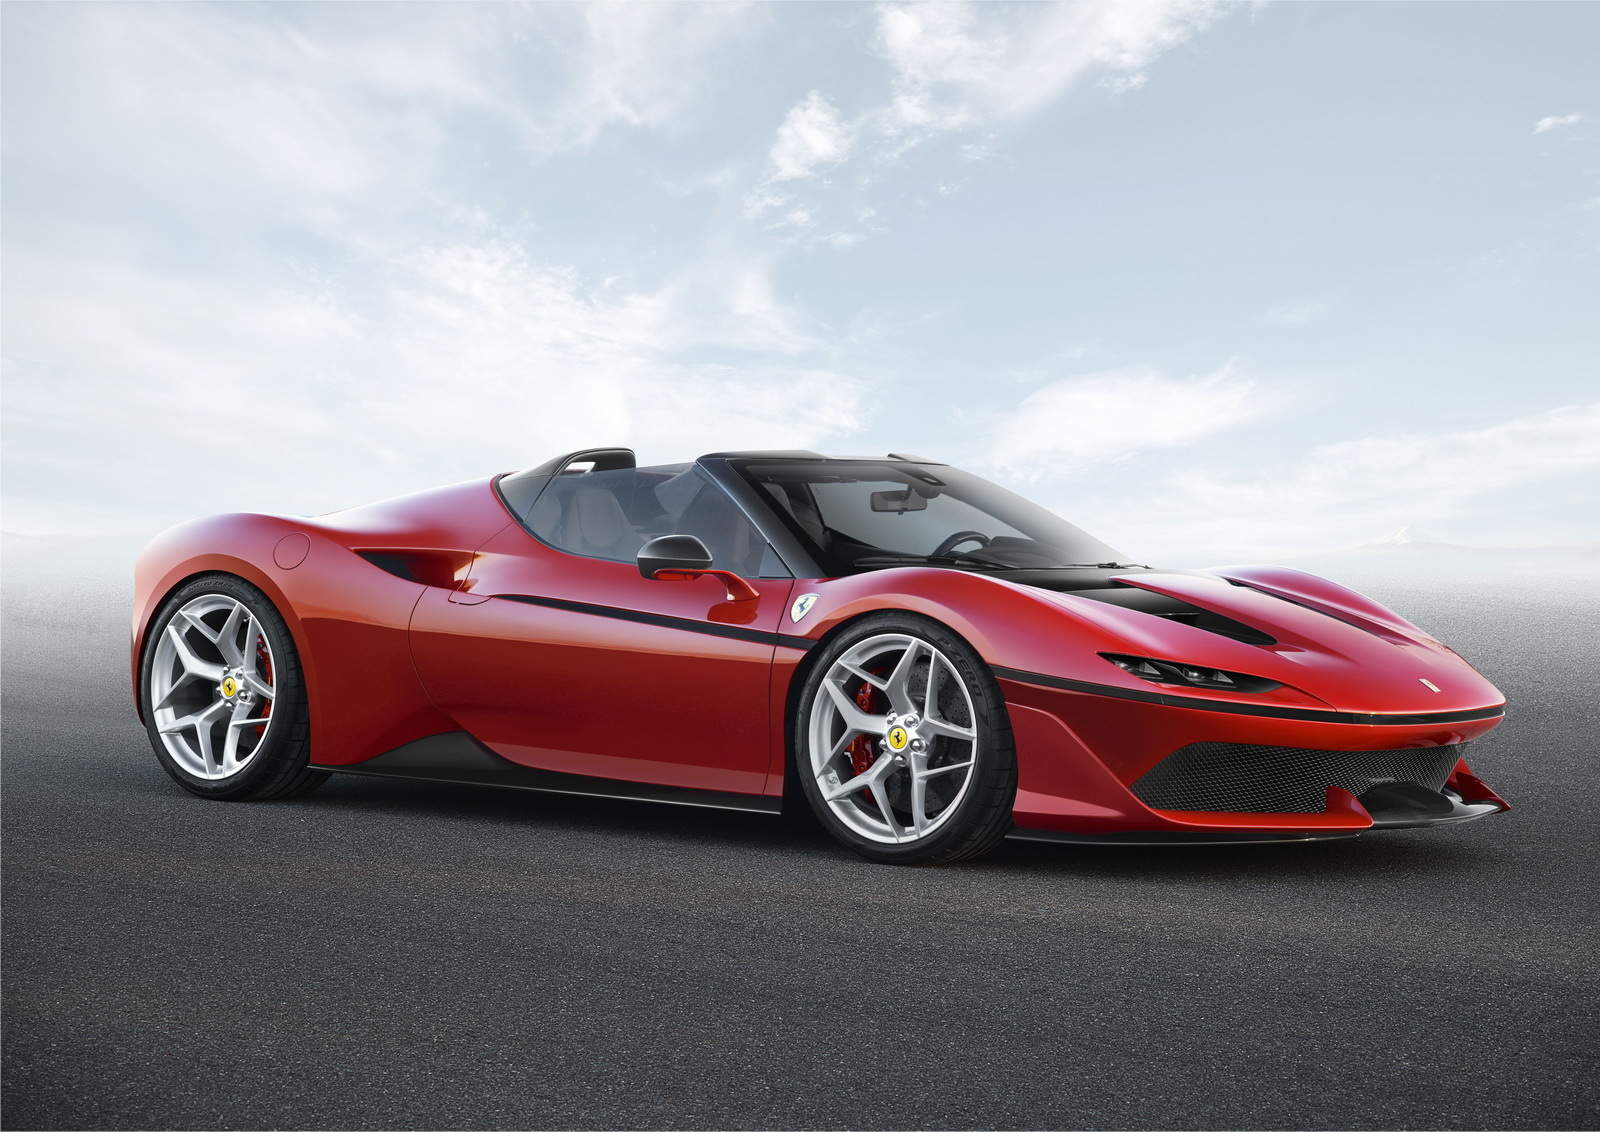 Officiala-Ferrari-J50-Limited-Edition-1.jpg